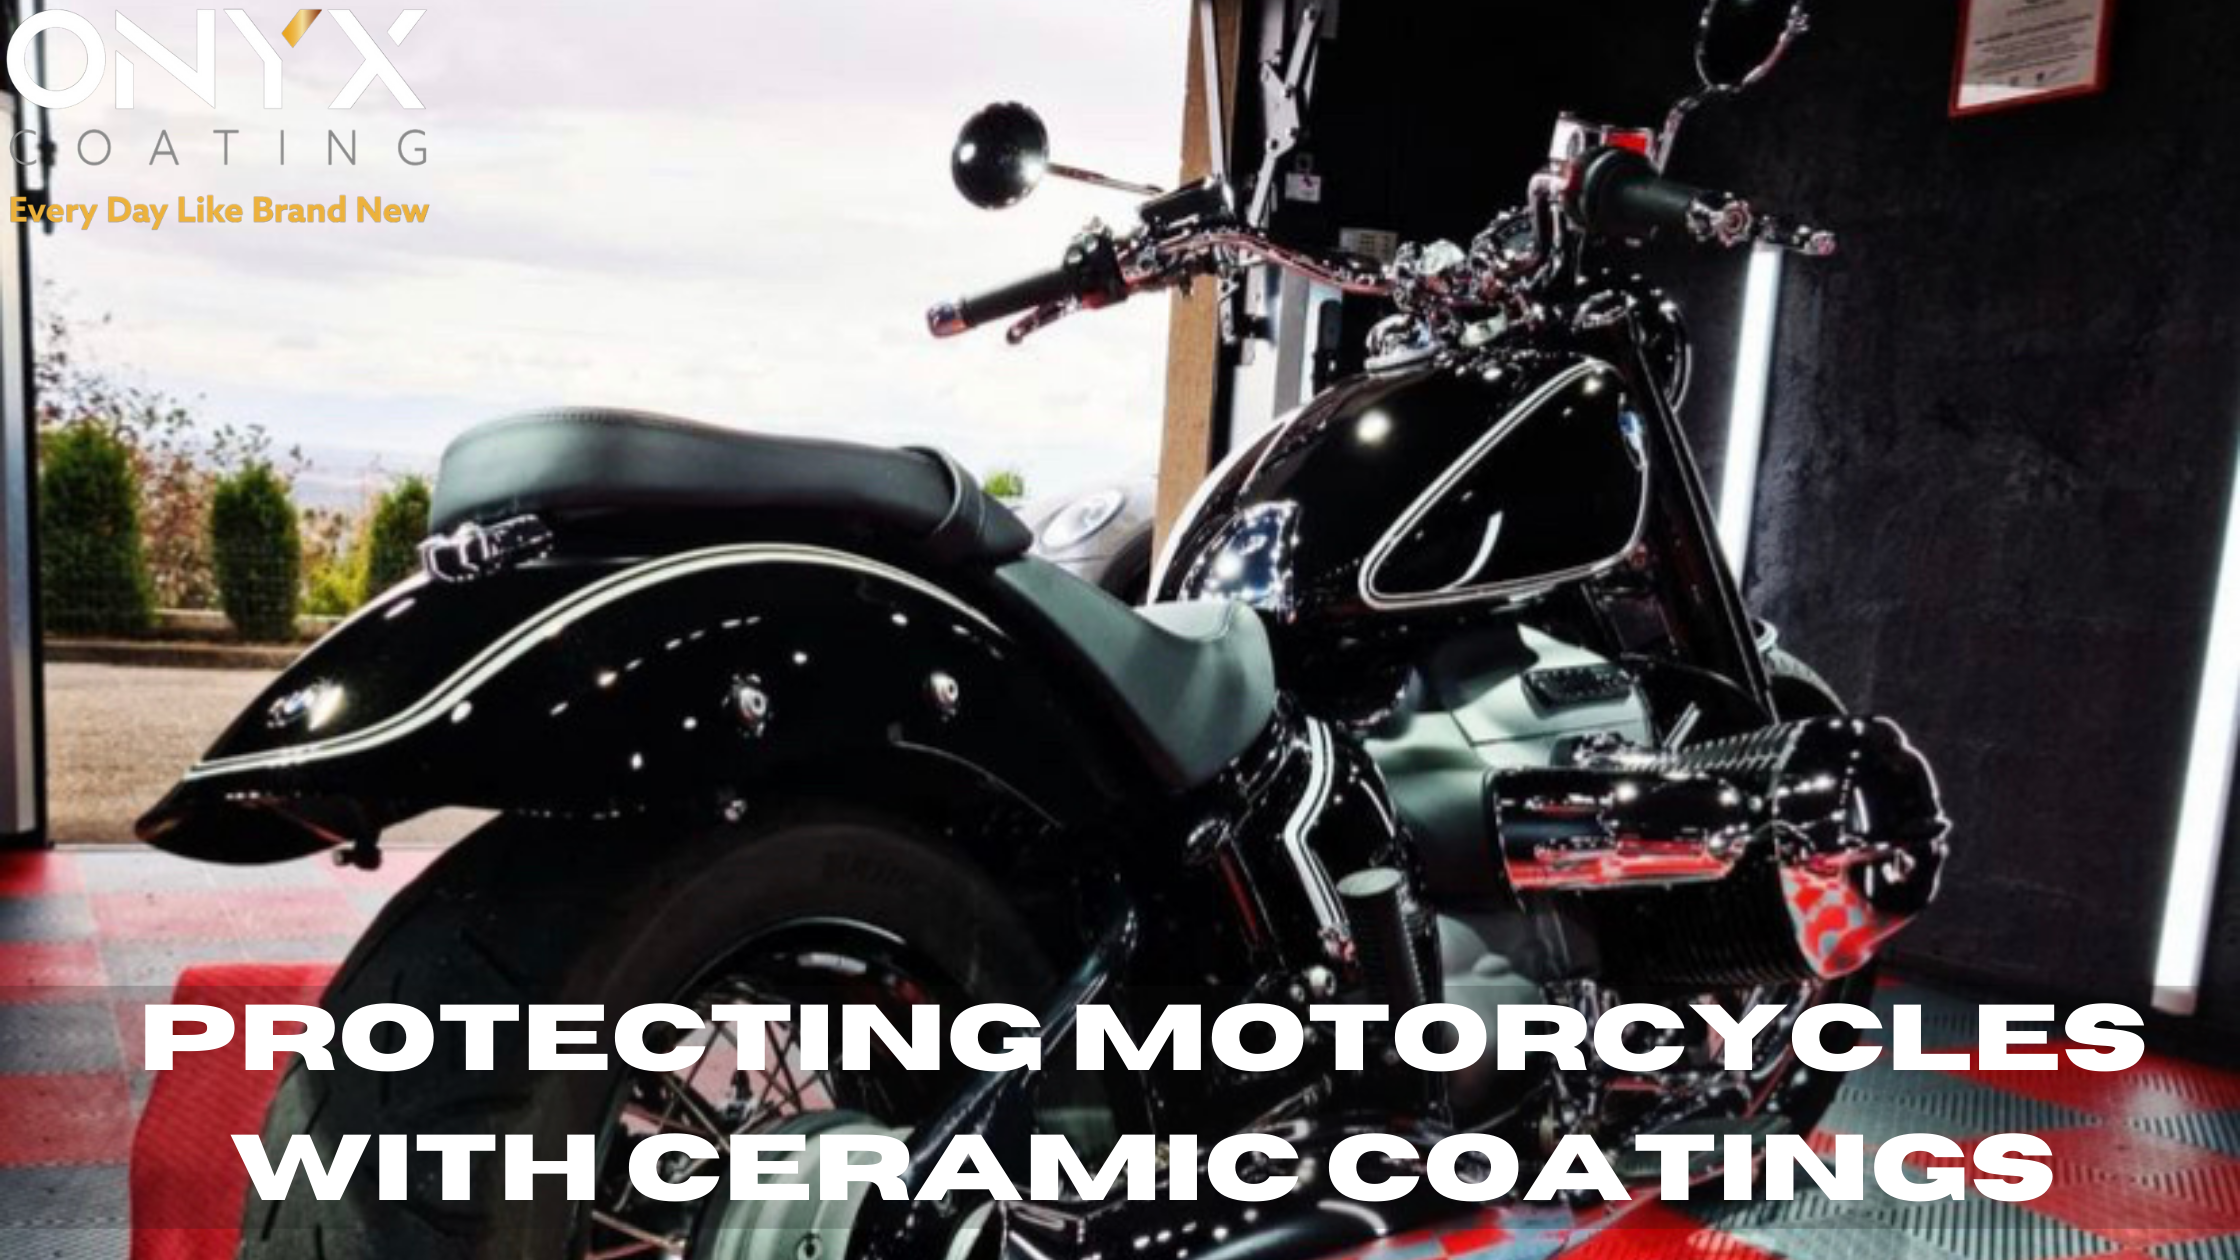 BMW R18 motorcycle Graphene coating @sos_cleancar images (Blog Banner)